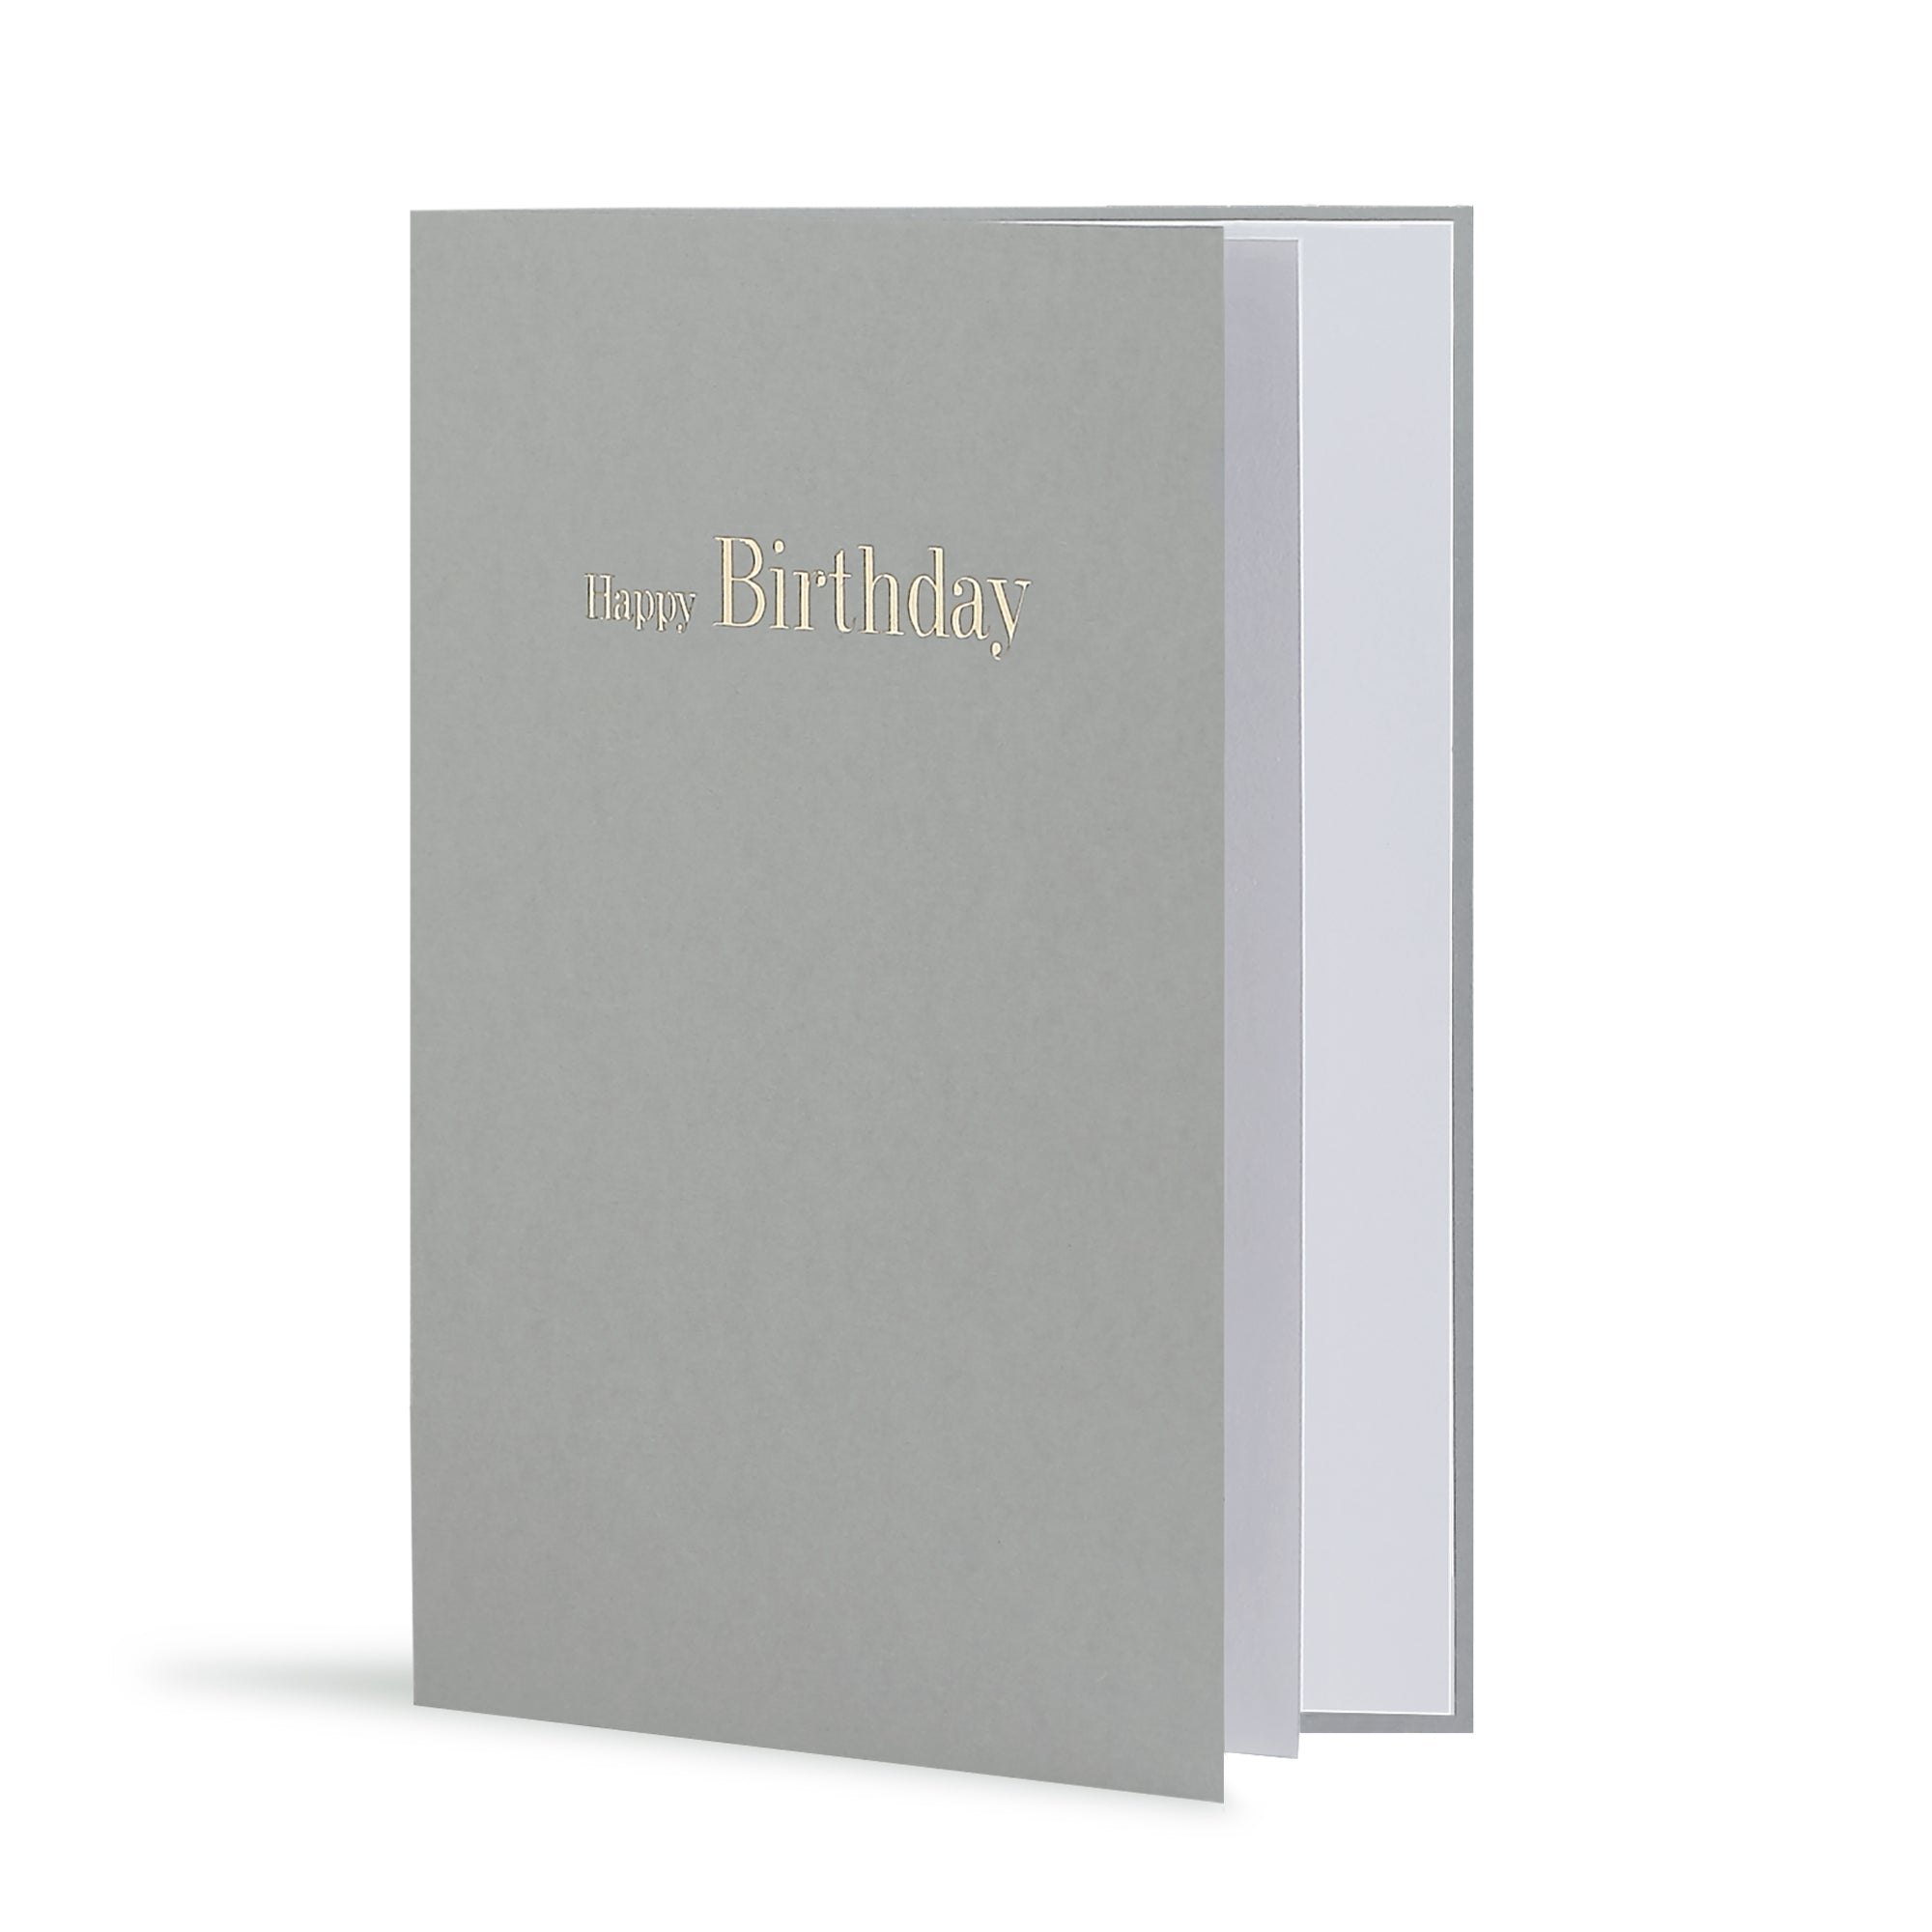 Happy Birthday Greeting Card in Grey, Side